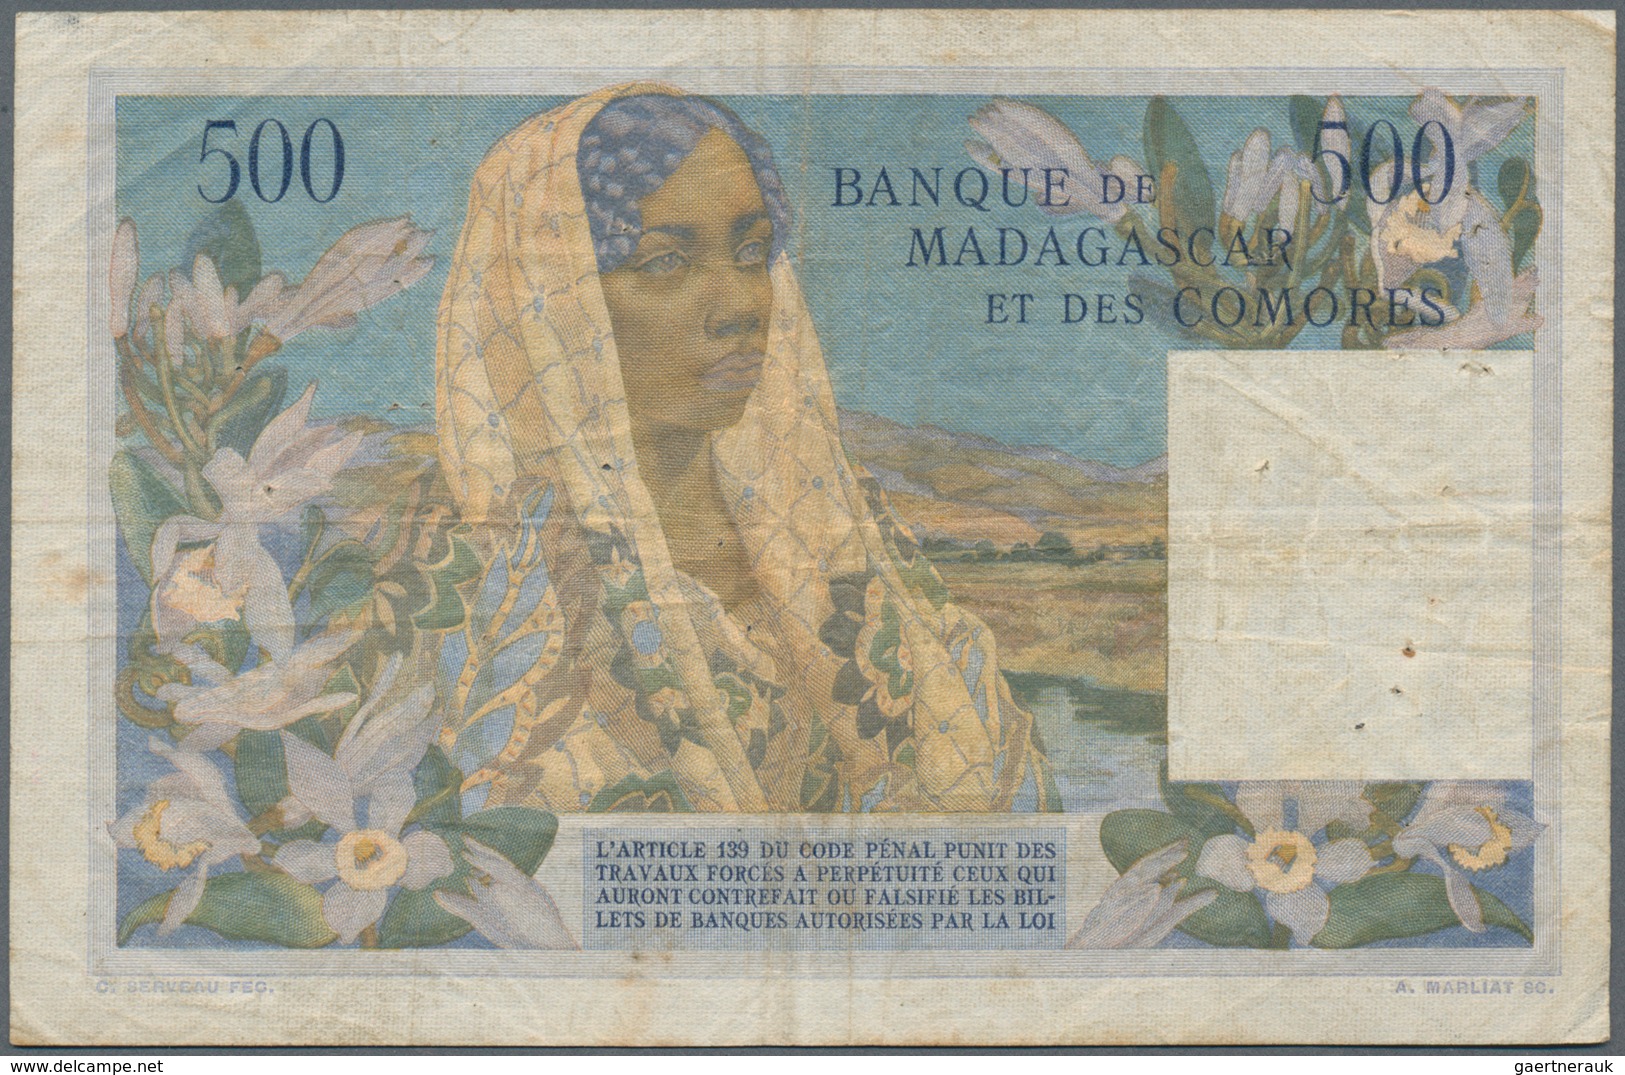 Madagascar: Banque De Madagascar Et Des Comores 500 Francs 1958, P.47, Great And Rare Note In Still - Madagascar